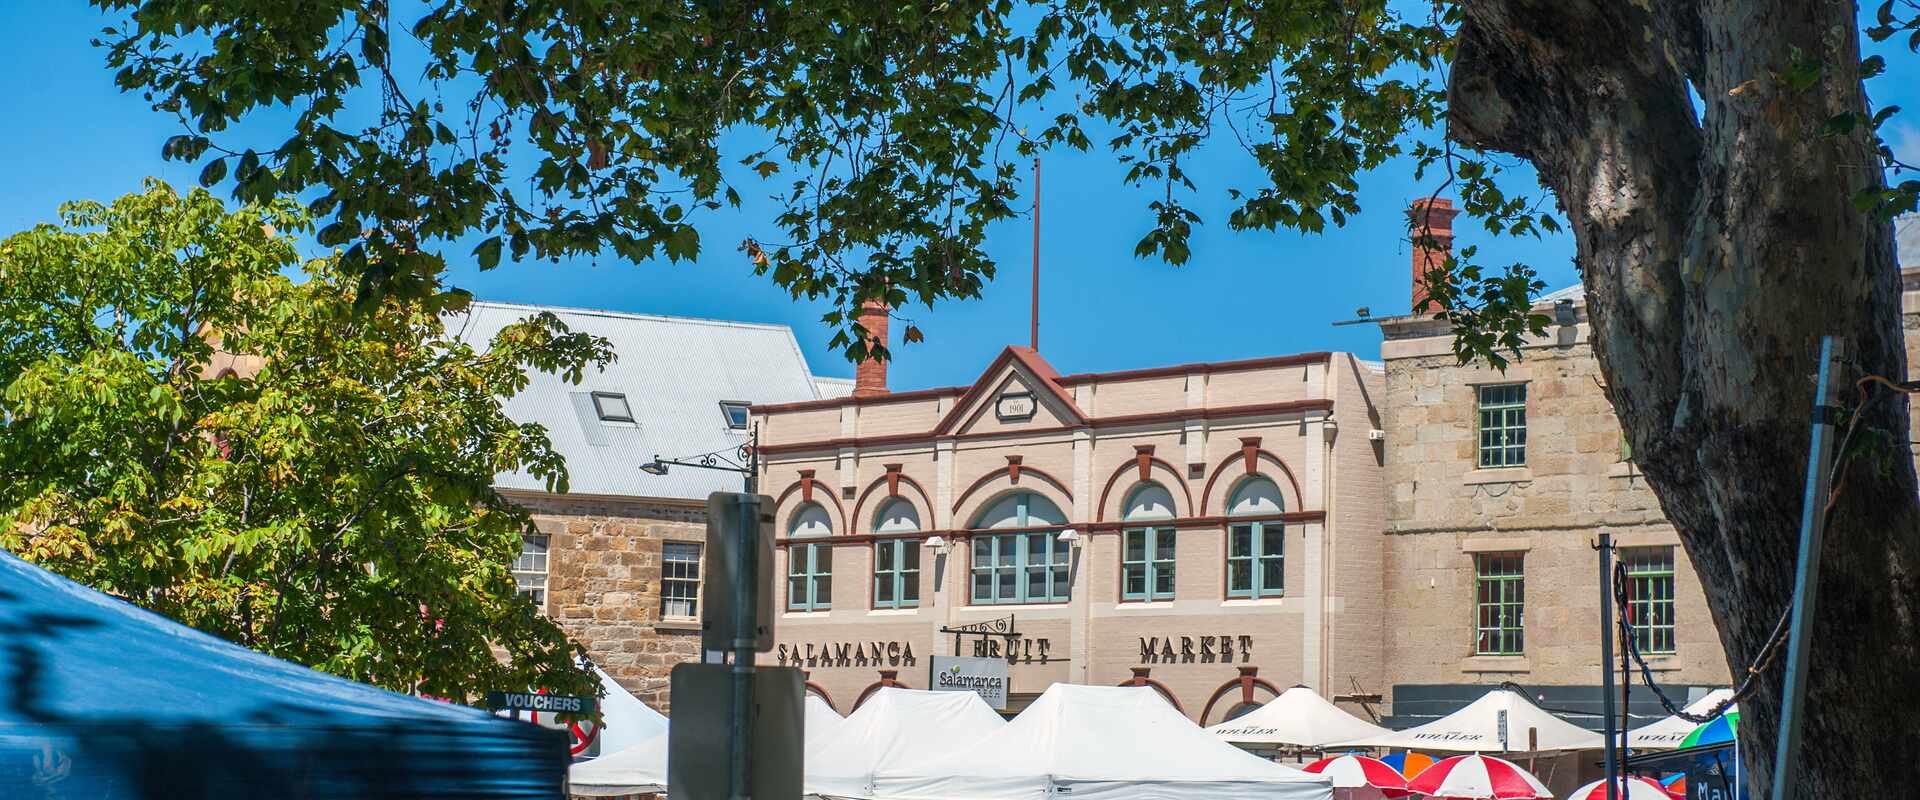 Market stalls on a sunny day at Salamanca Market in Hobart